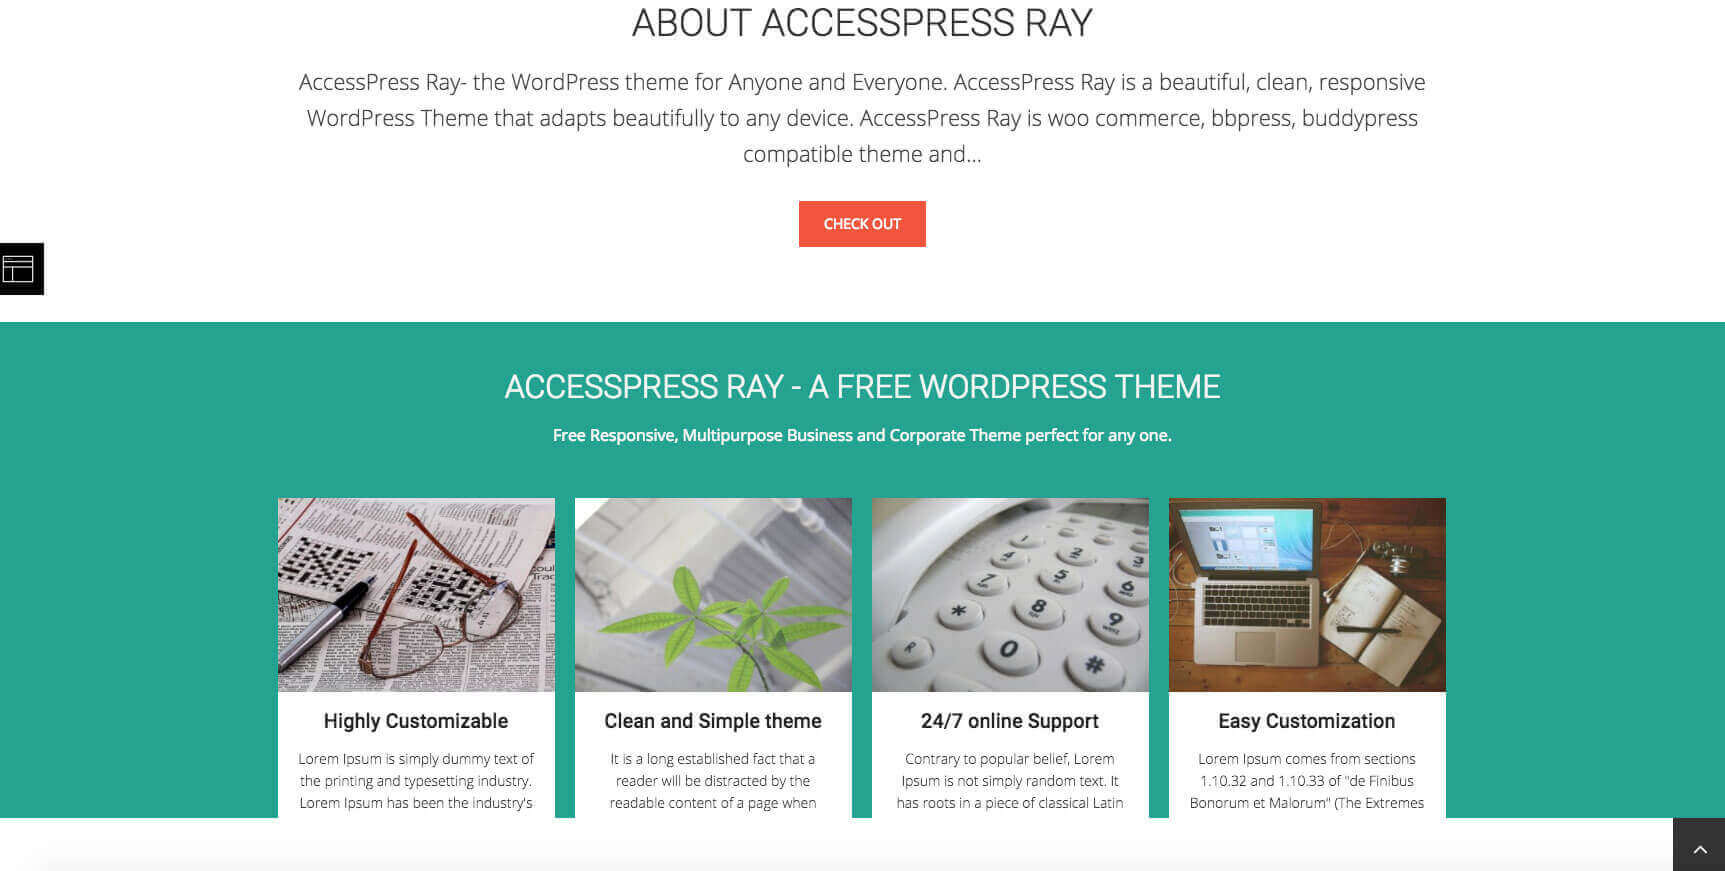 AccessPress Ray theme